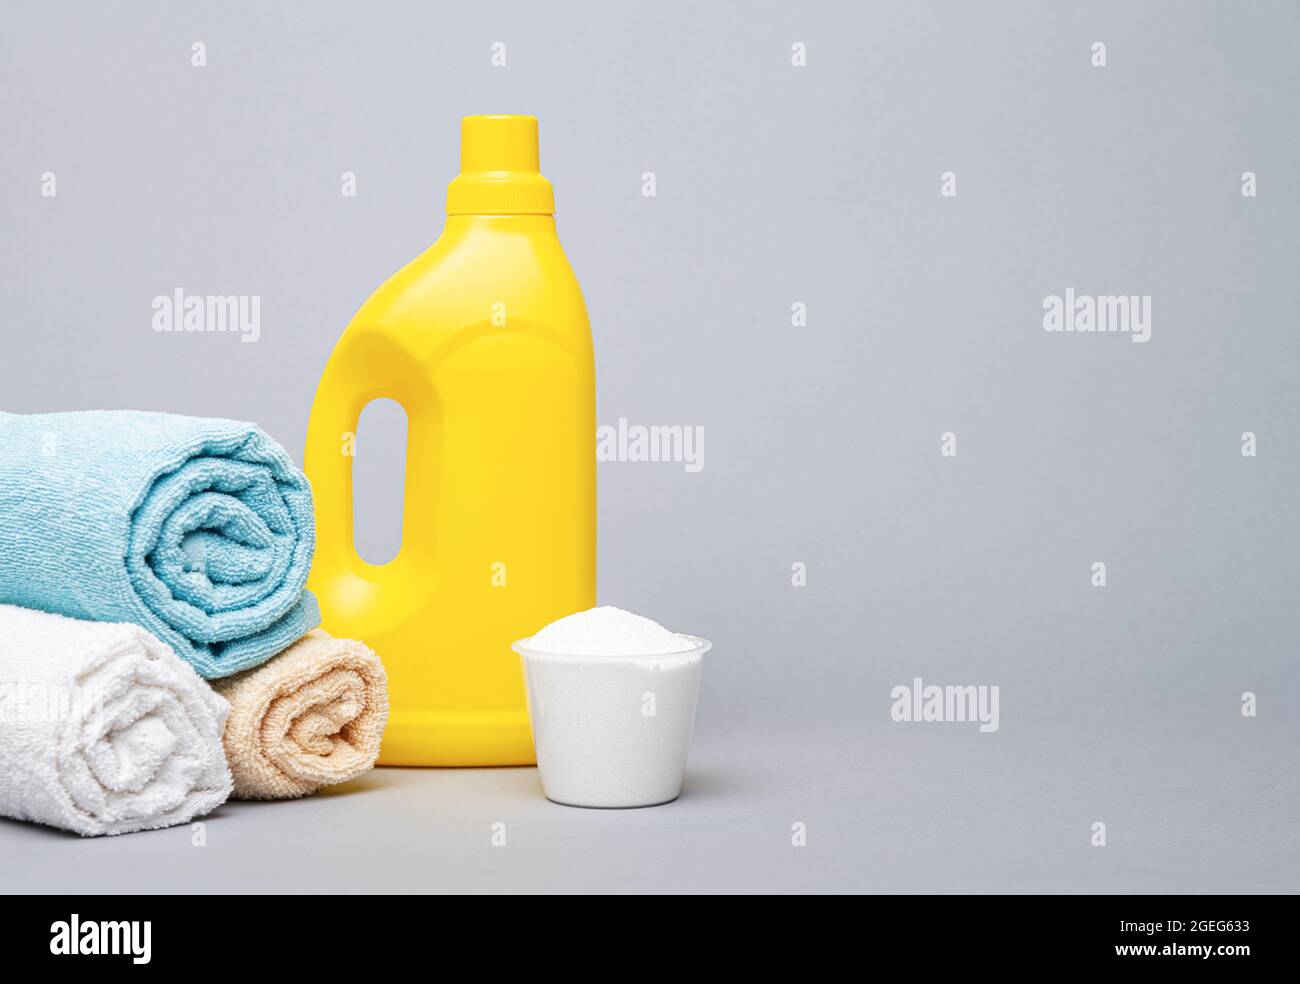 Laundry detergent and liquid detergent. Stock Photo